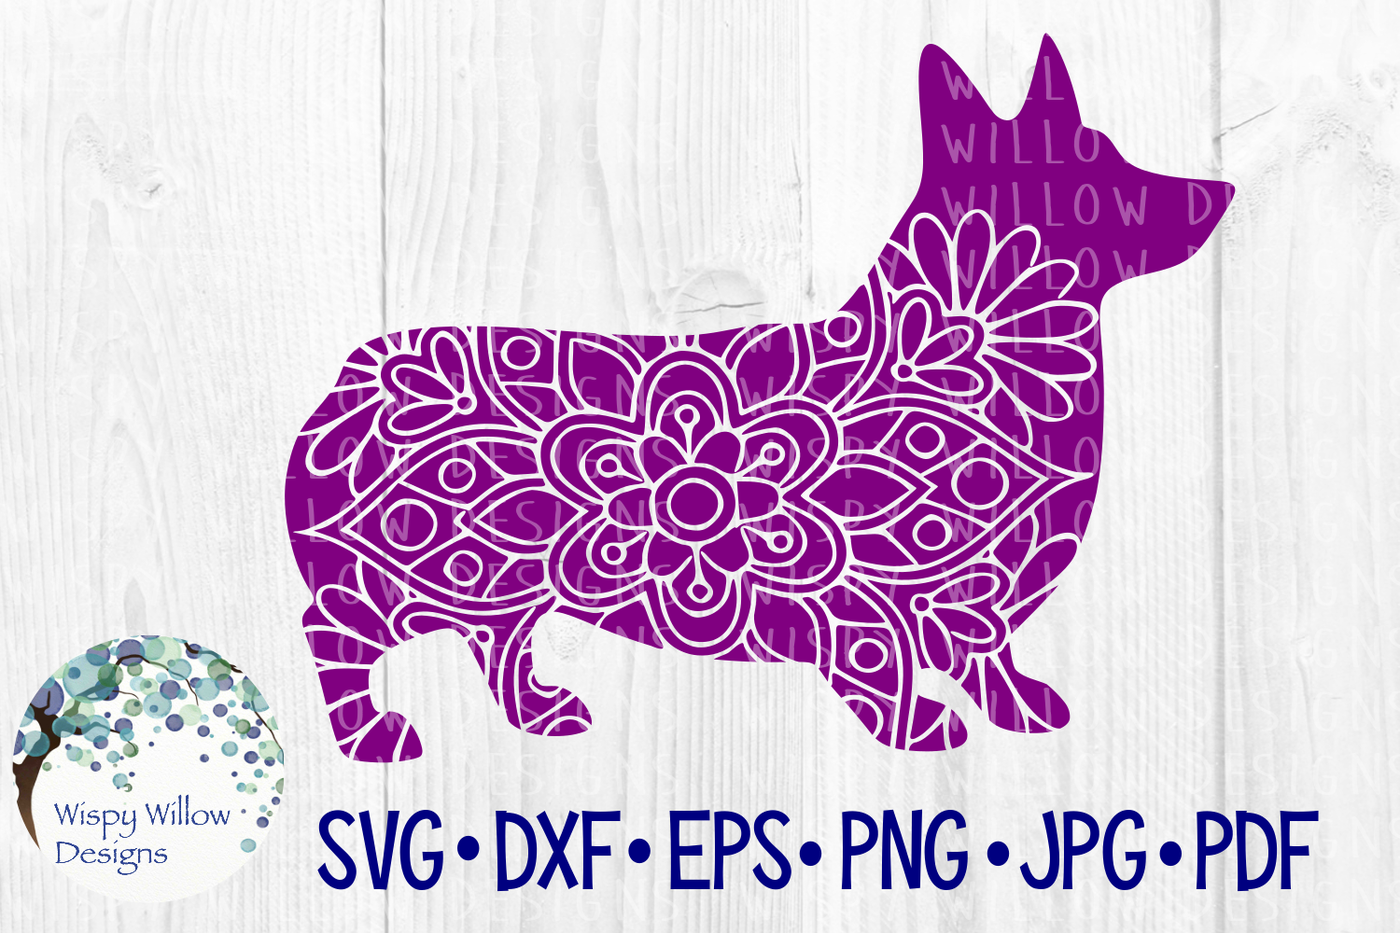 Corgi Dog Mandala Svg Dxf Eps Png Jpg Pdf By Wispy Willow Designs Thehungryjpeg Com